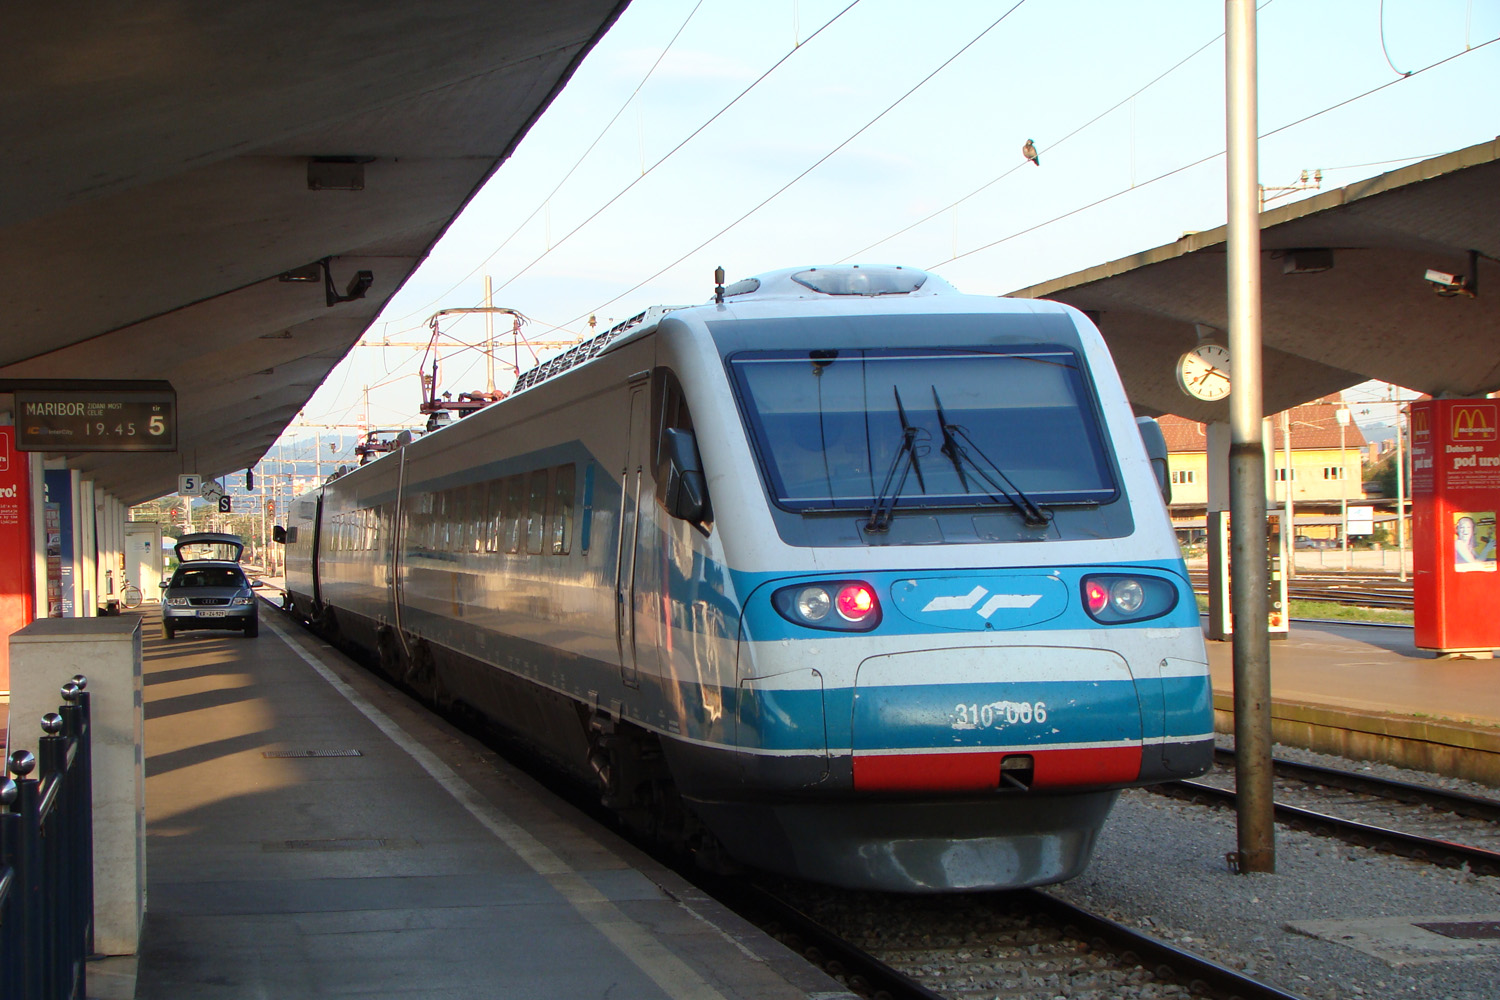 Slovenske železnice: Slovenian Railways Is Bad